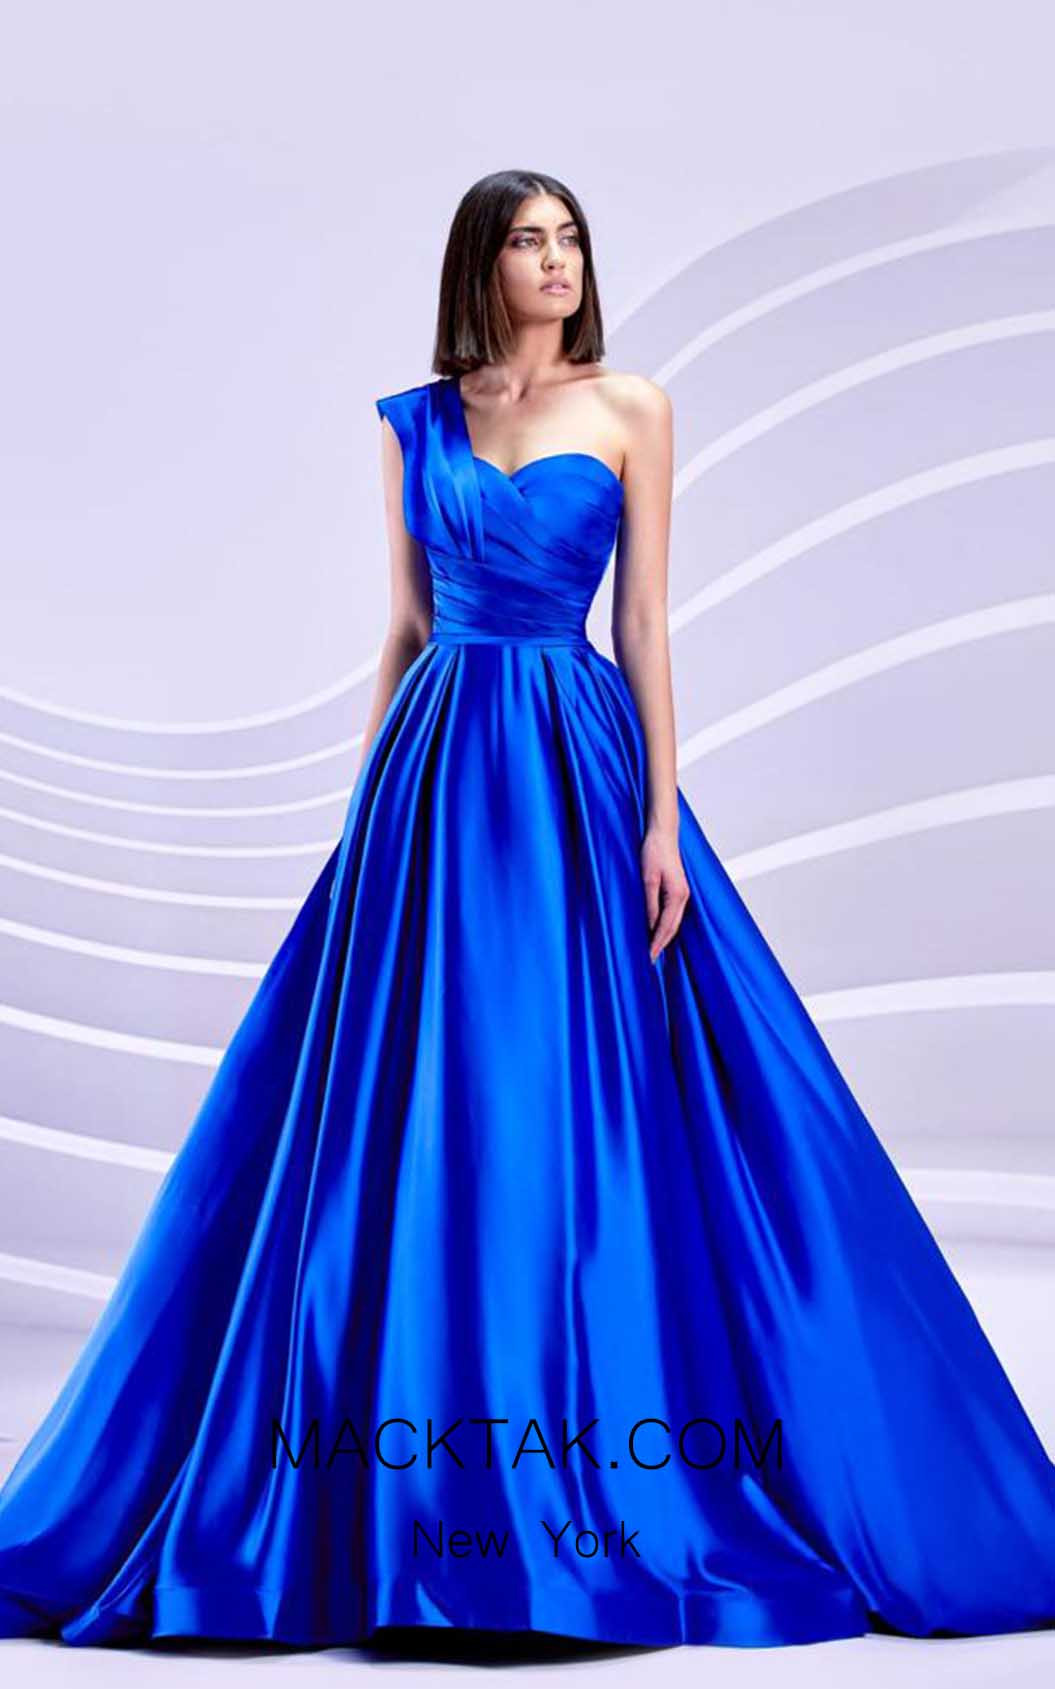 MackTak Couture 058 Dress